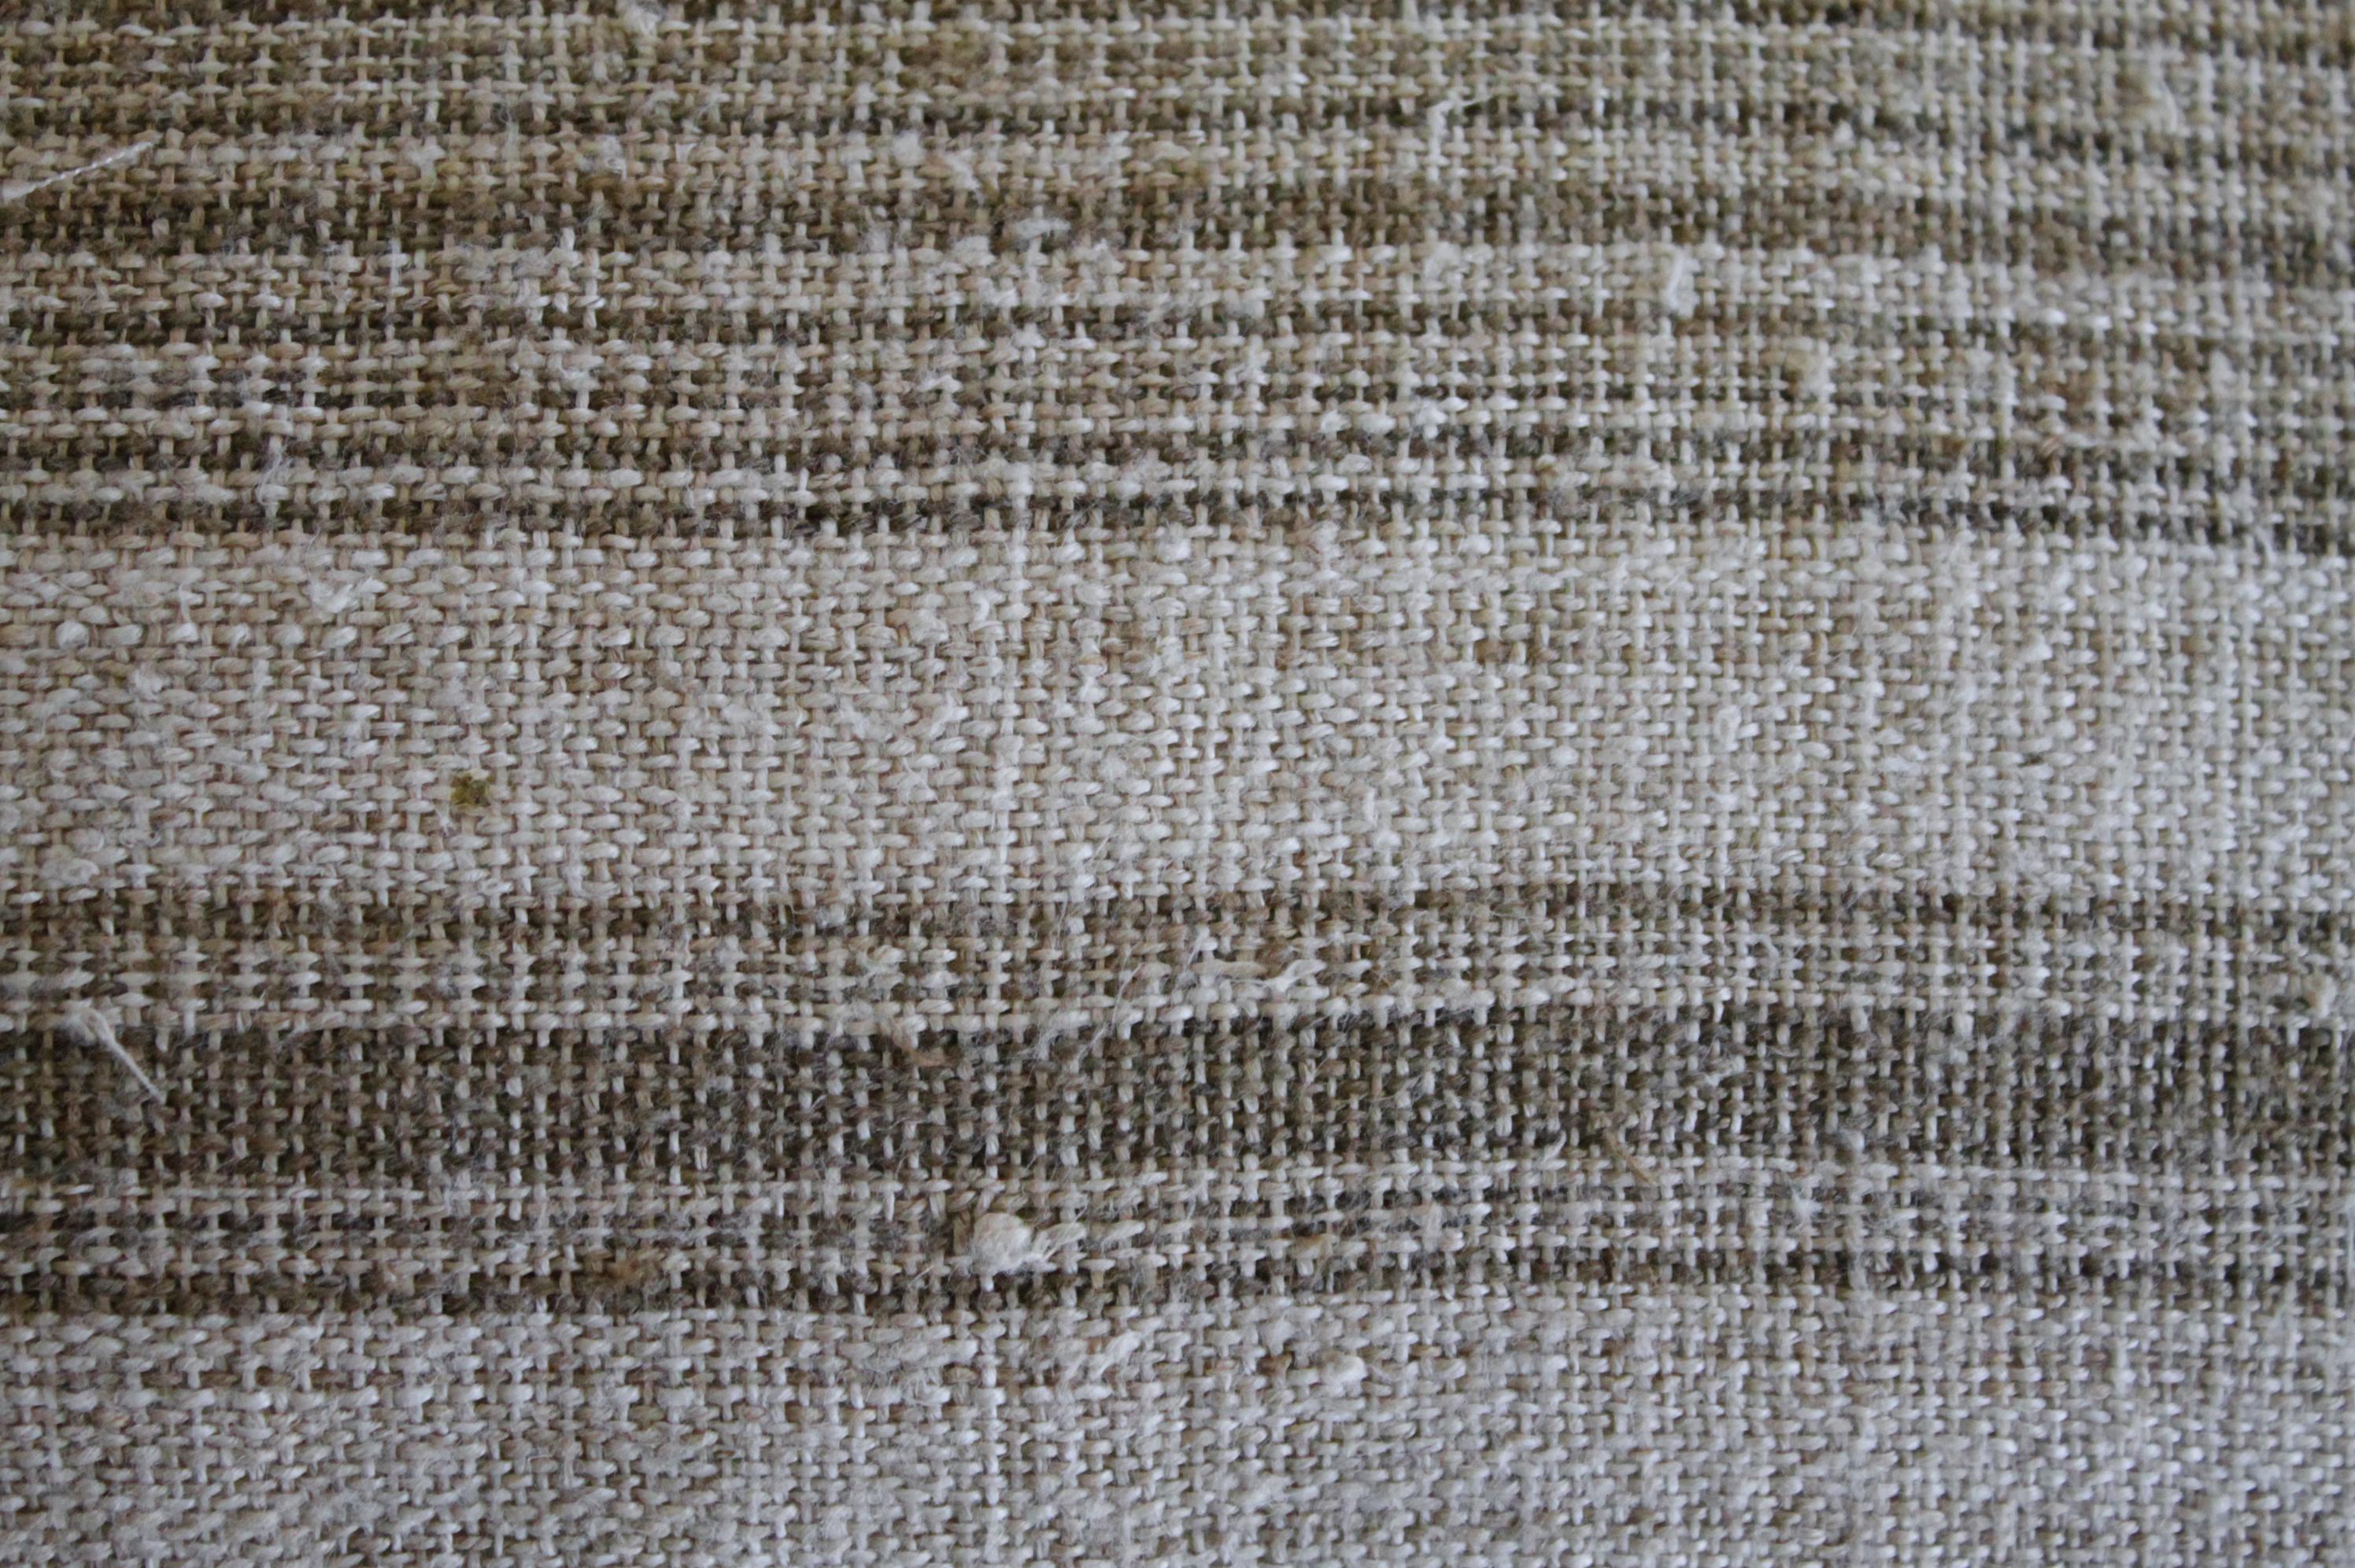 Antique Homespun Linen Pillows in Natural and Brown Stripe 1